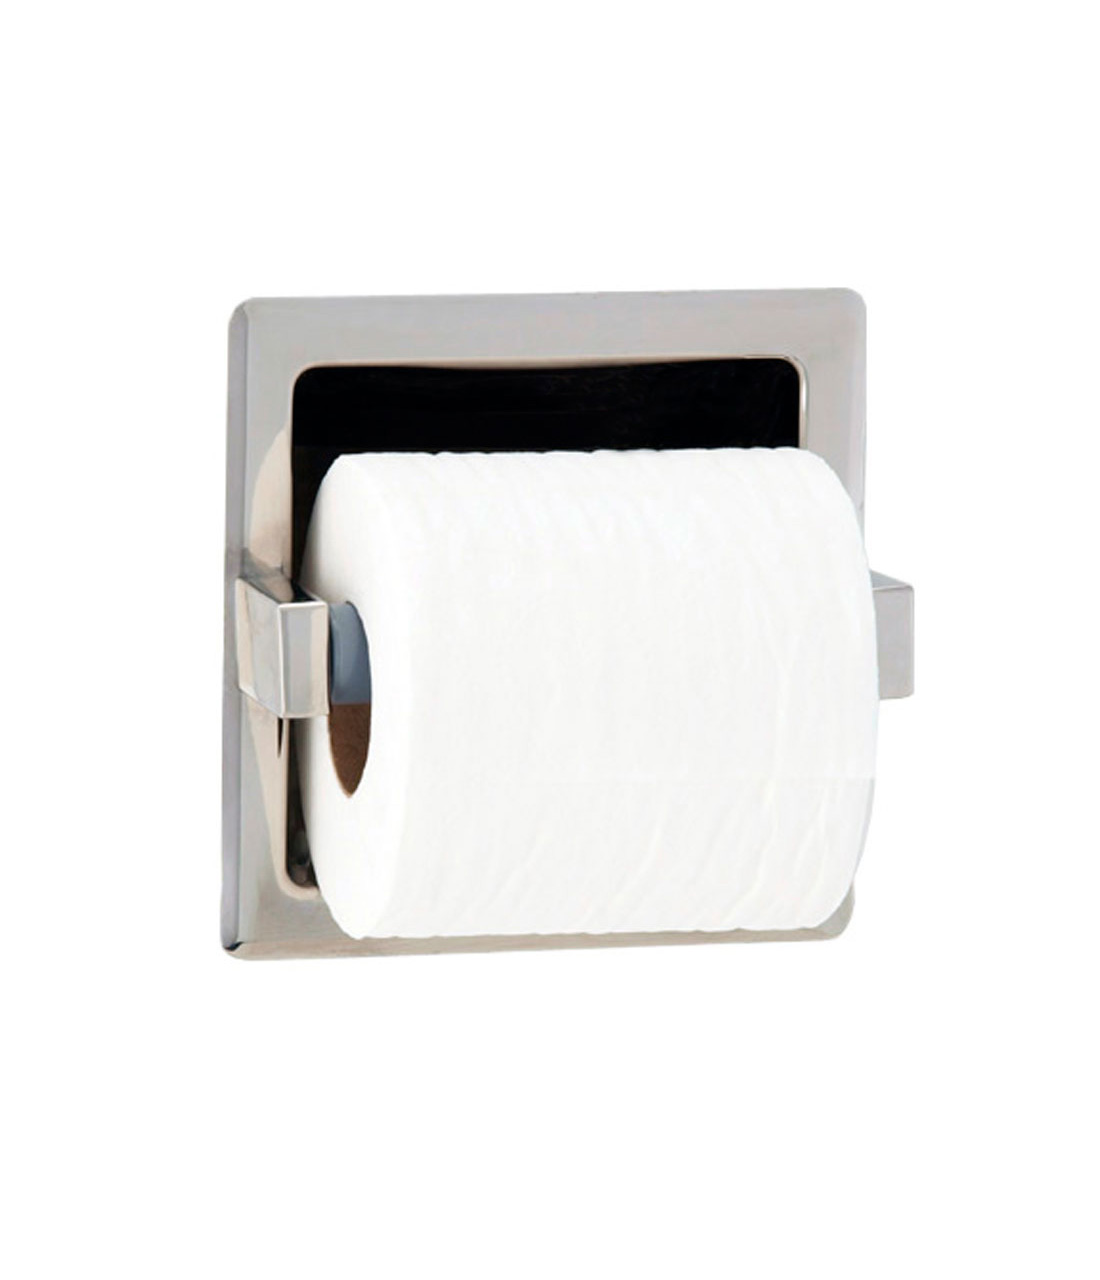 Recessed Toilet Tissue Holder - (Model #: 212)-image